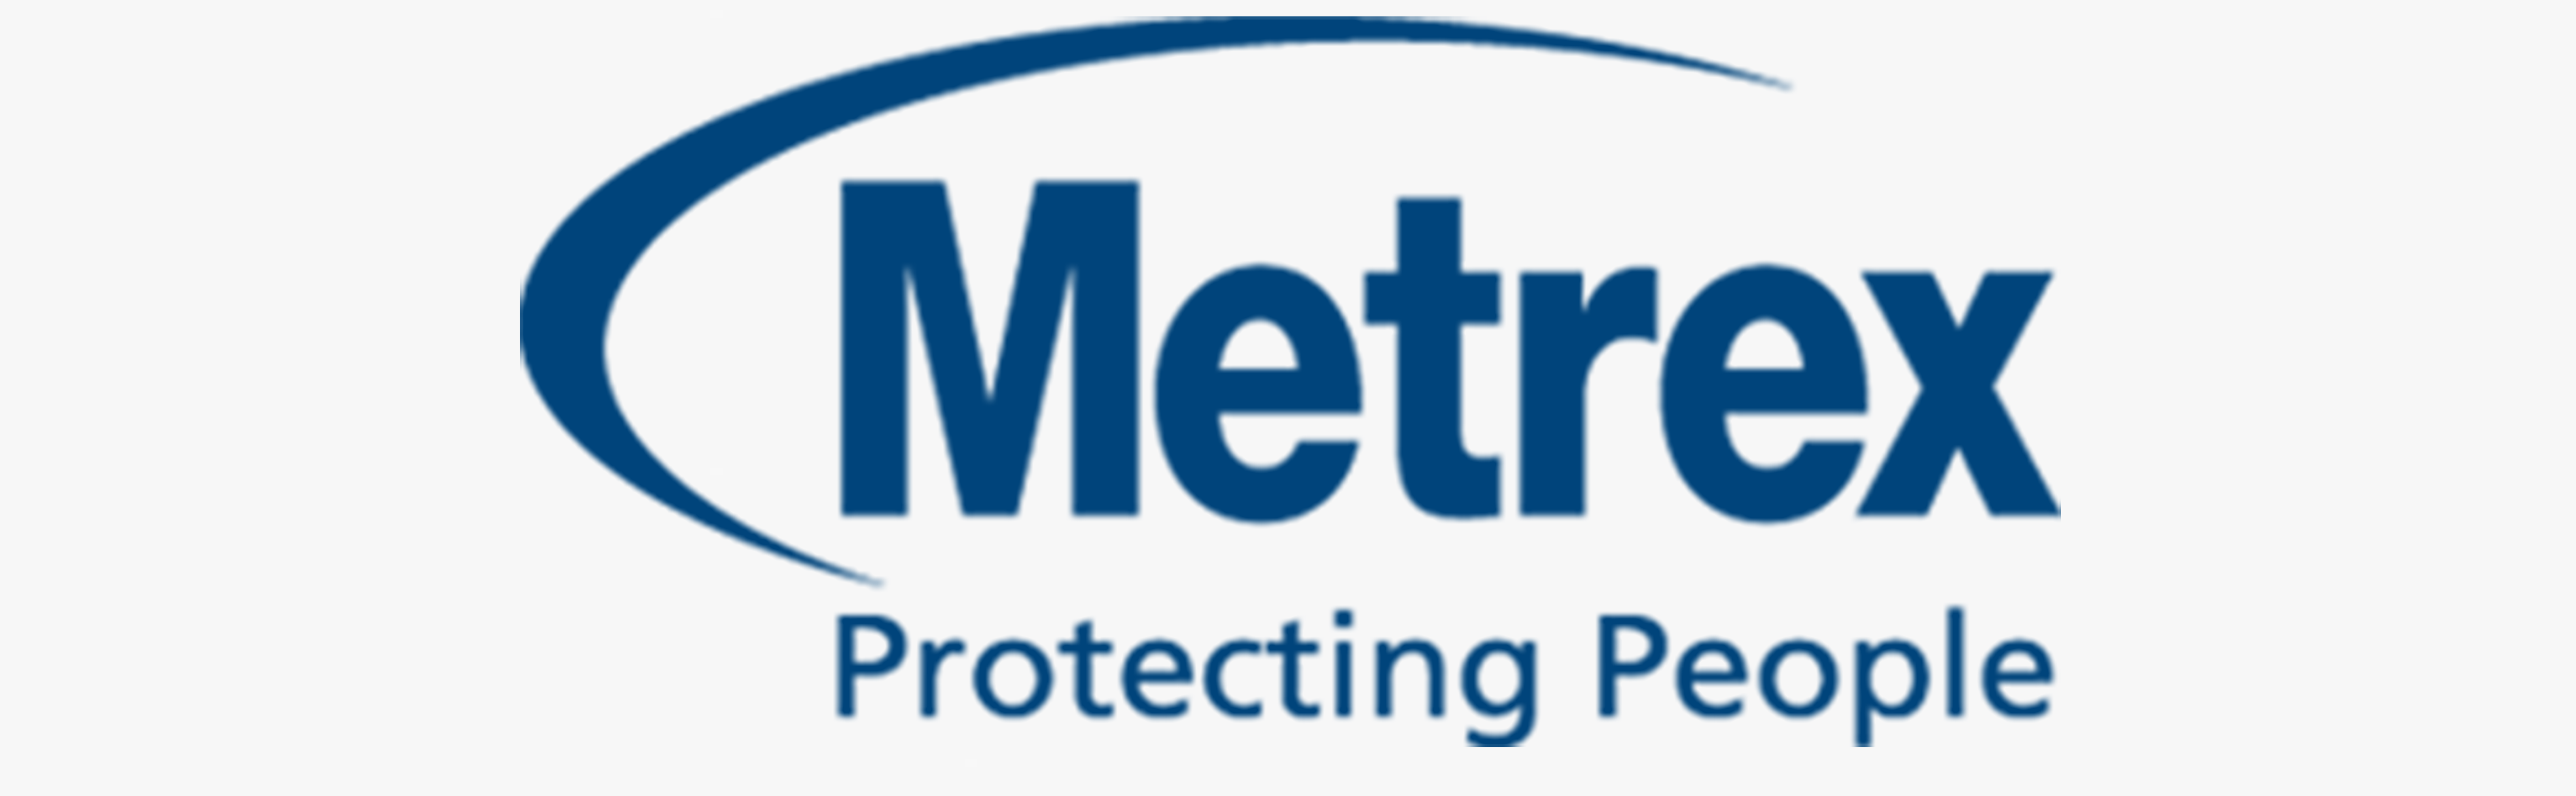 Metrex Research Corporation